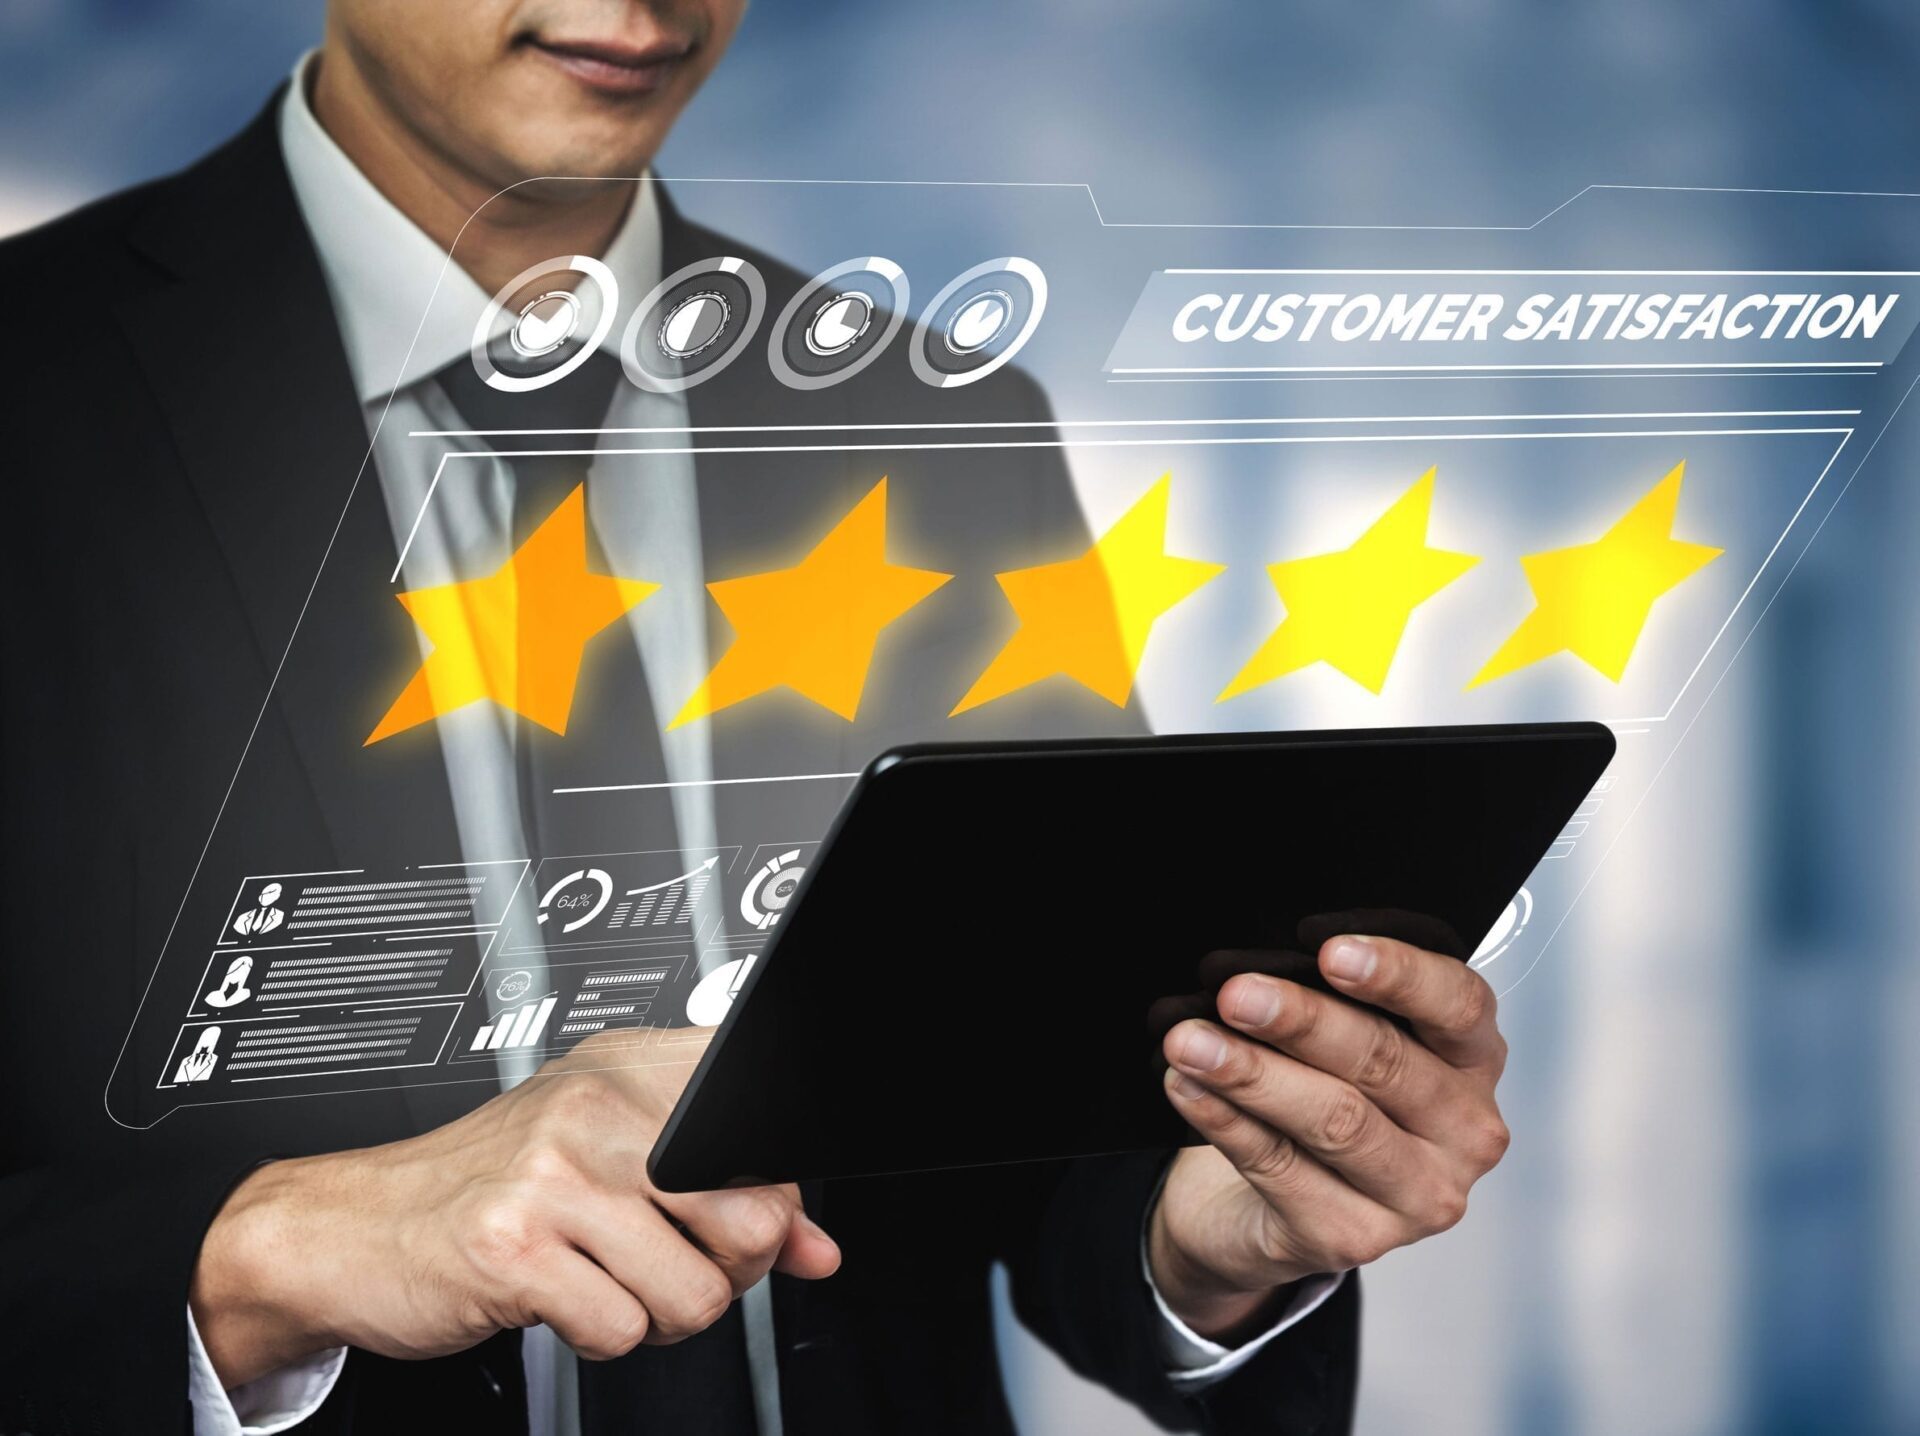 customer-review-satisfaction-feedback-survey-concept